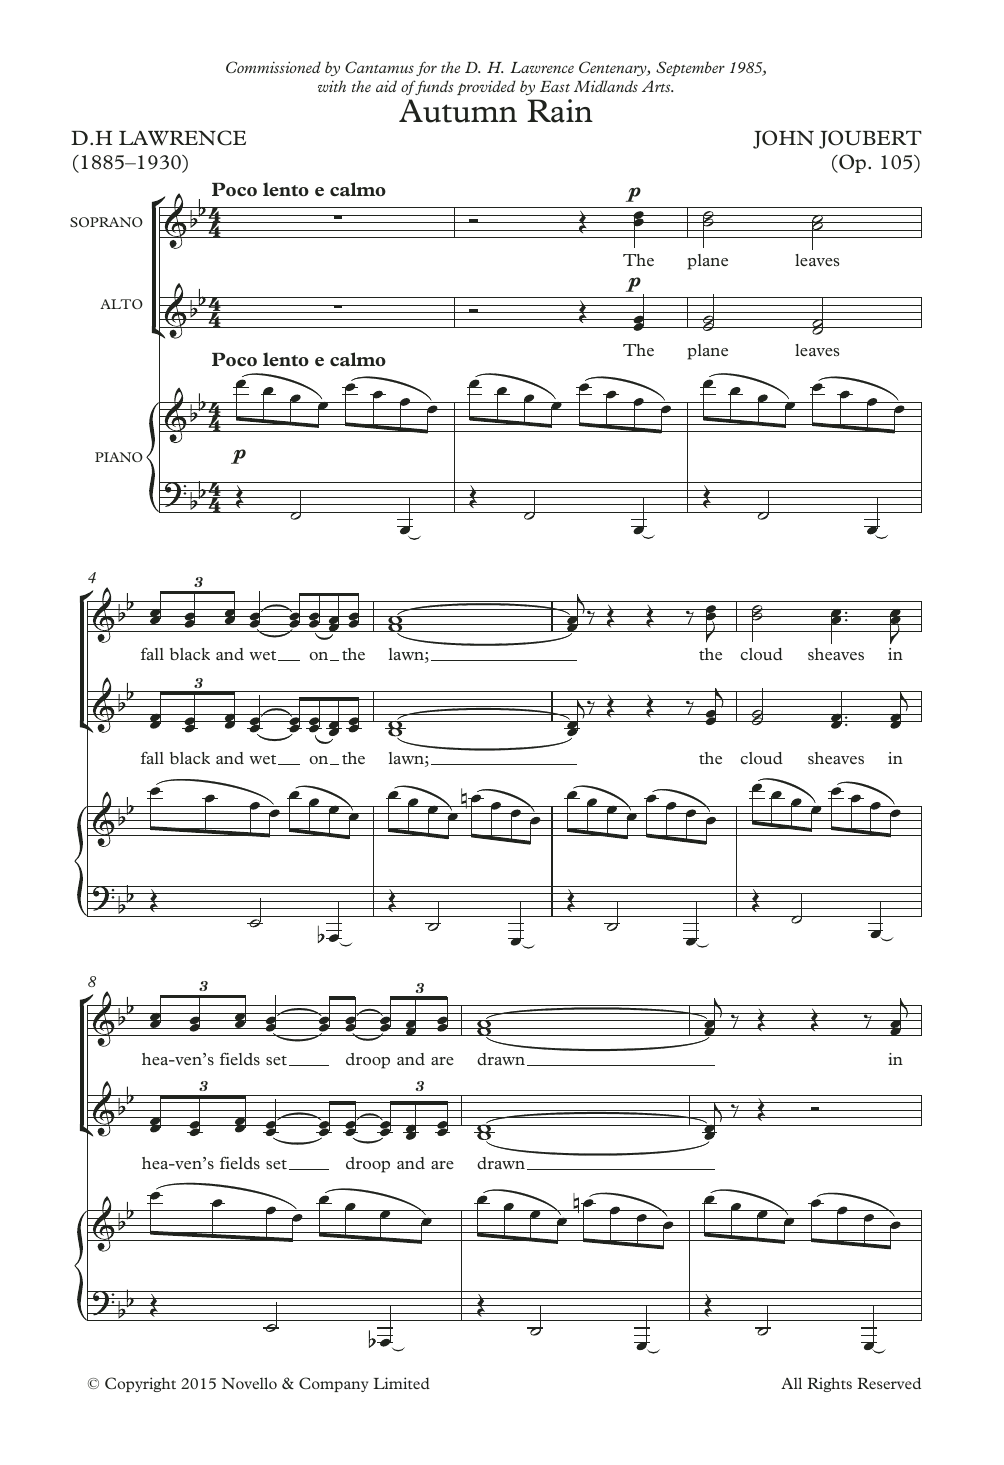 John Joubert Autumn Rain Sheet Music Notes & Chords for Piano, Vocal & Guitar - Download or Print PDF